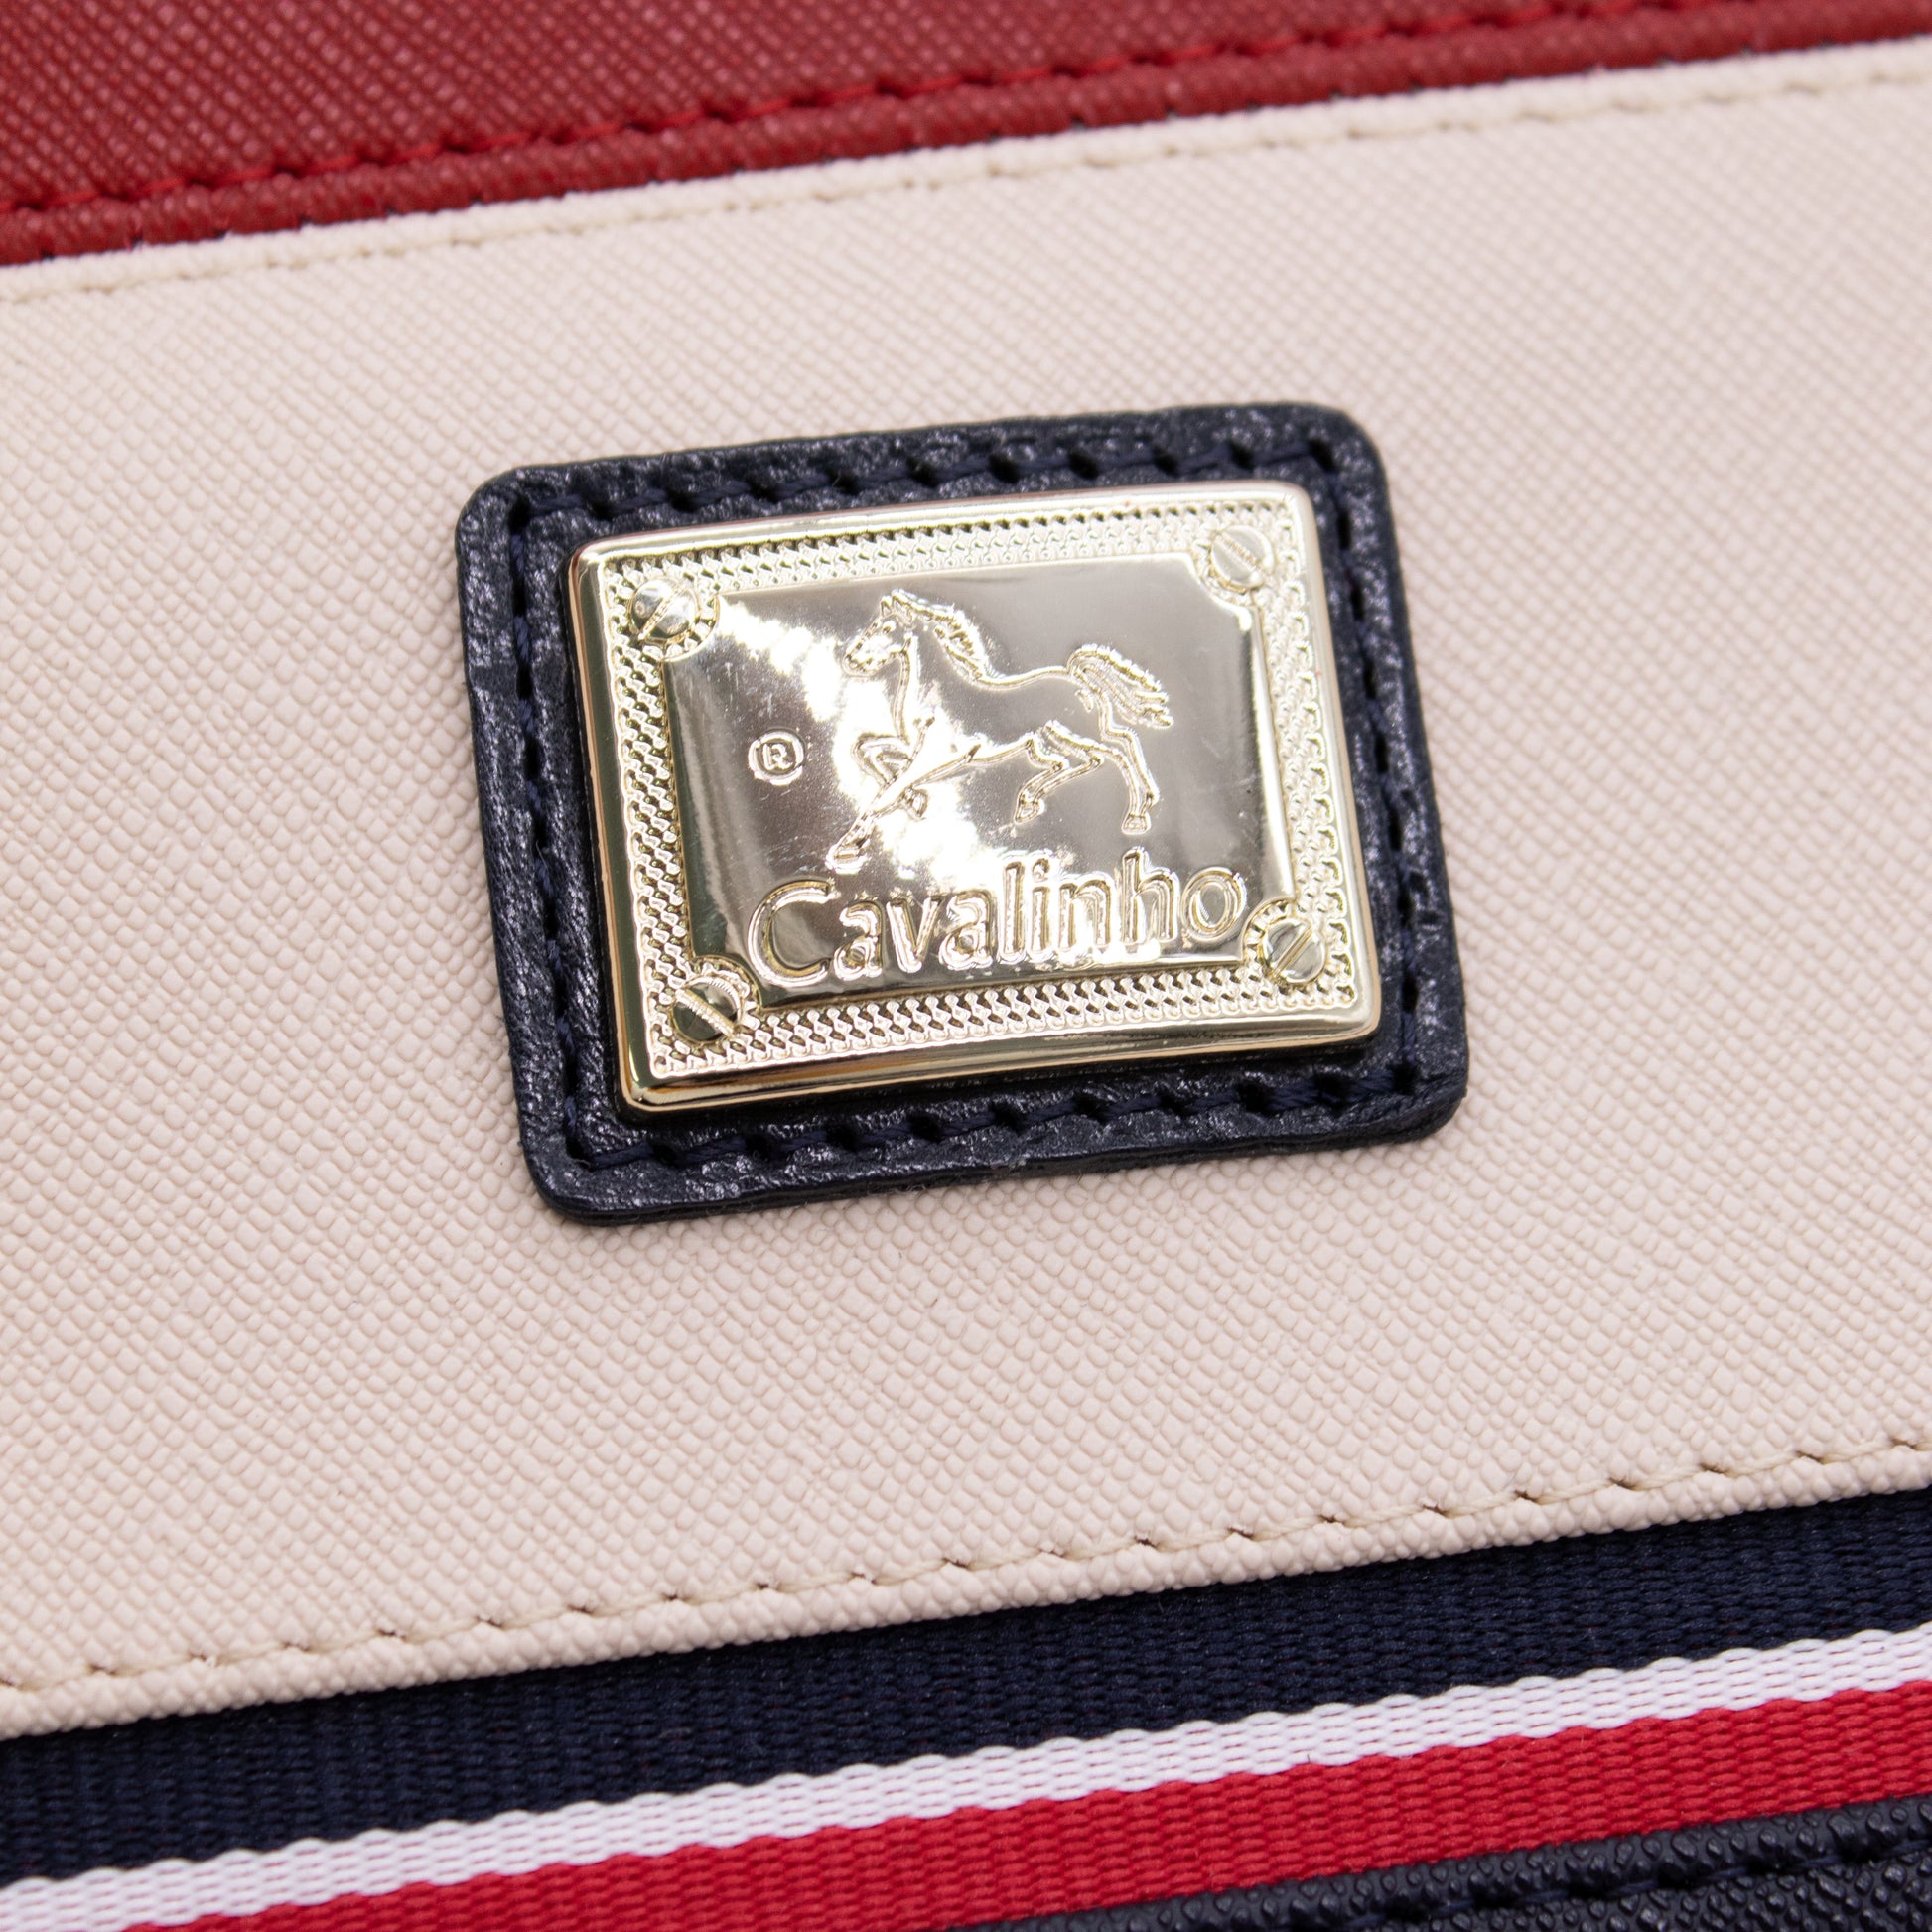 Cavalinho Unique Handbag - Navy / Beige / Red - 18260408_2